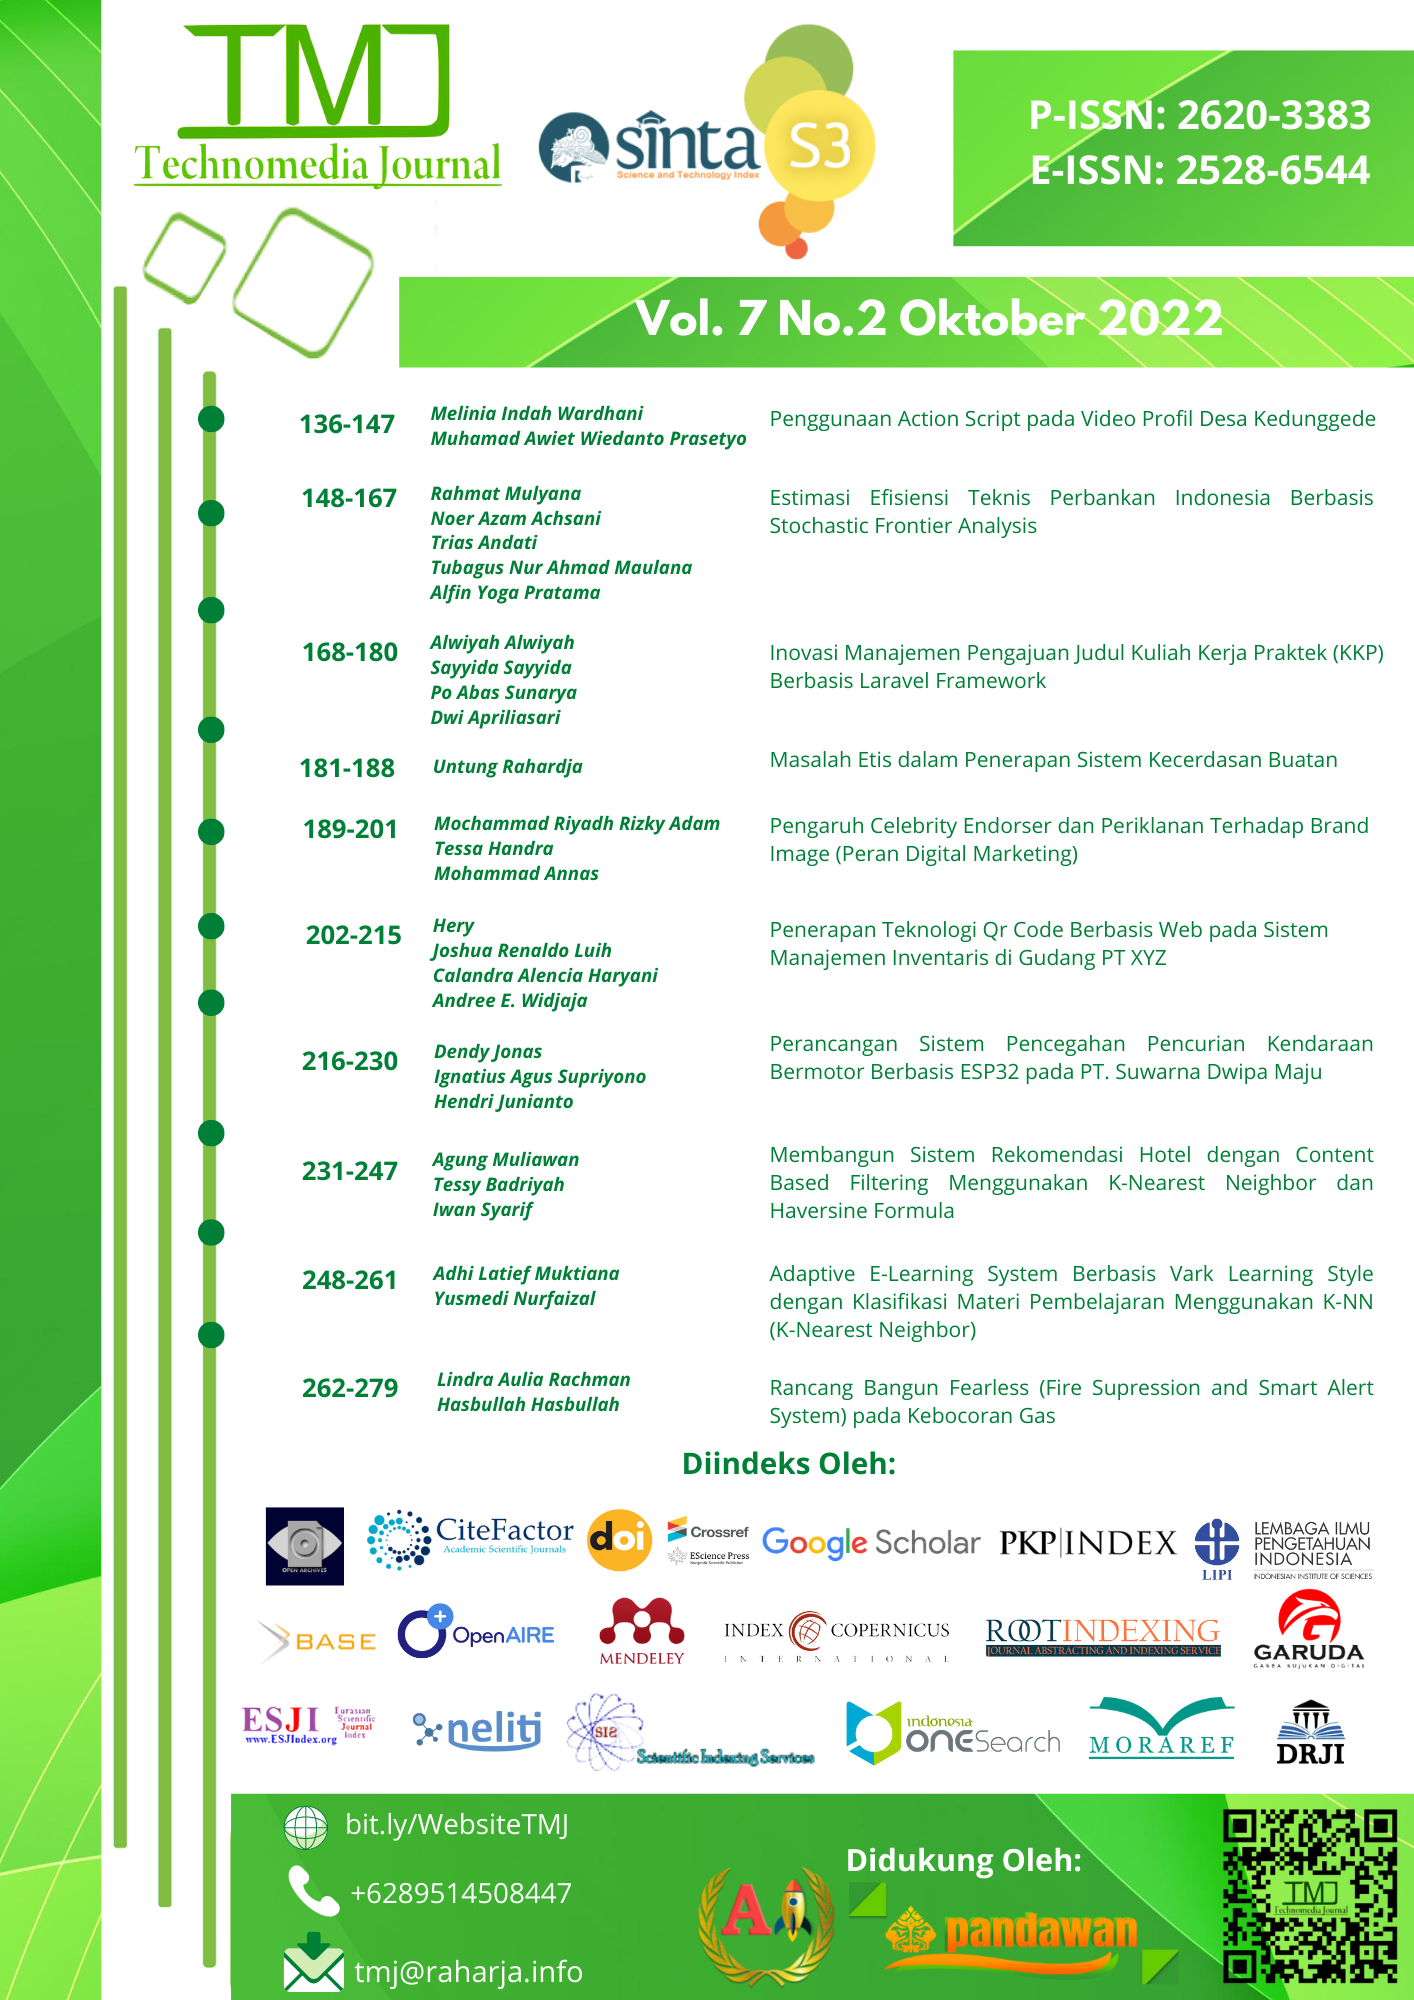 					Lihat Vol 7 No 2 October (2022): TMJ (Technomedia Journal)
				